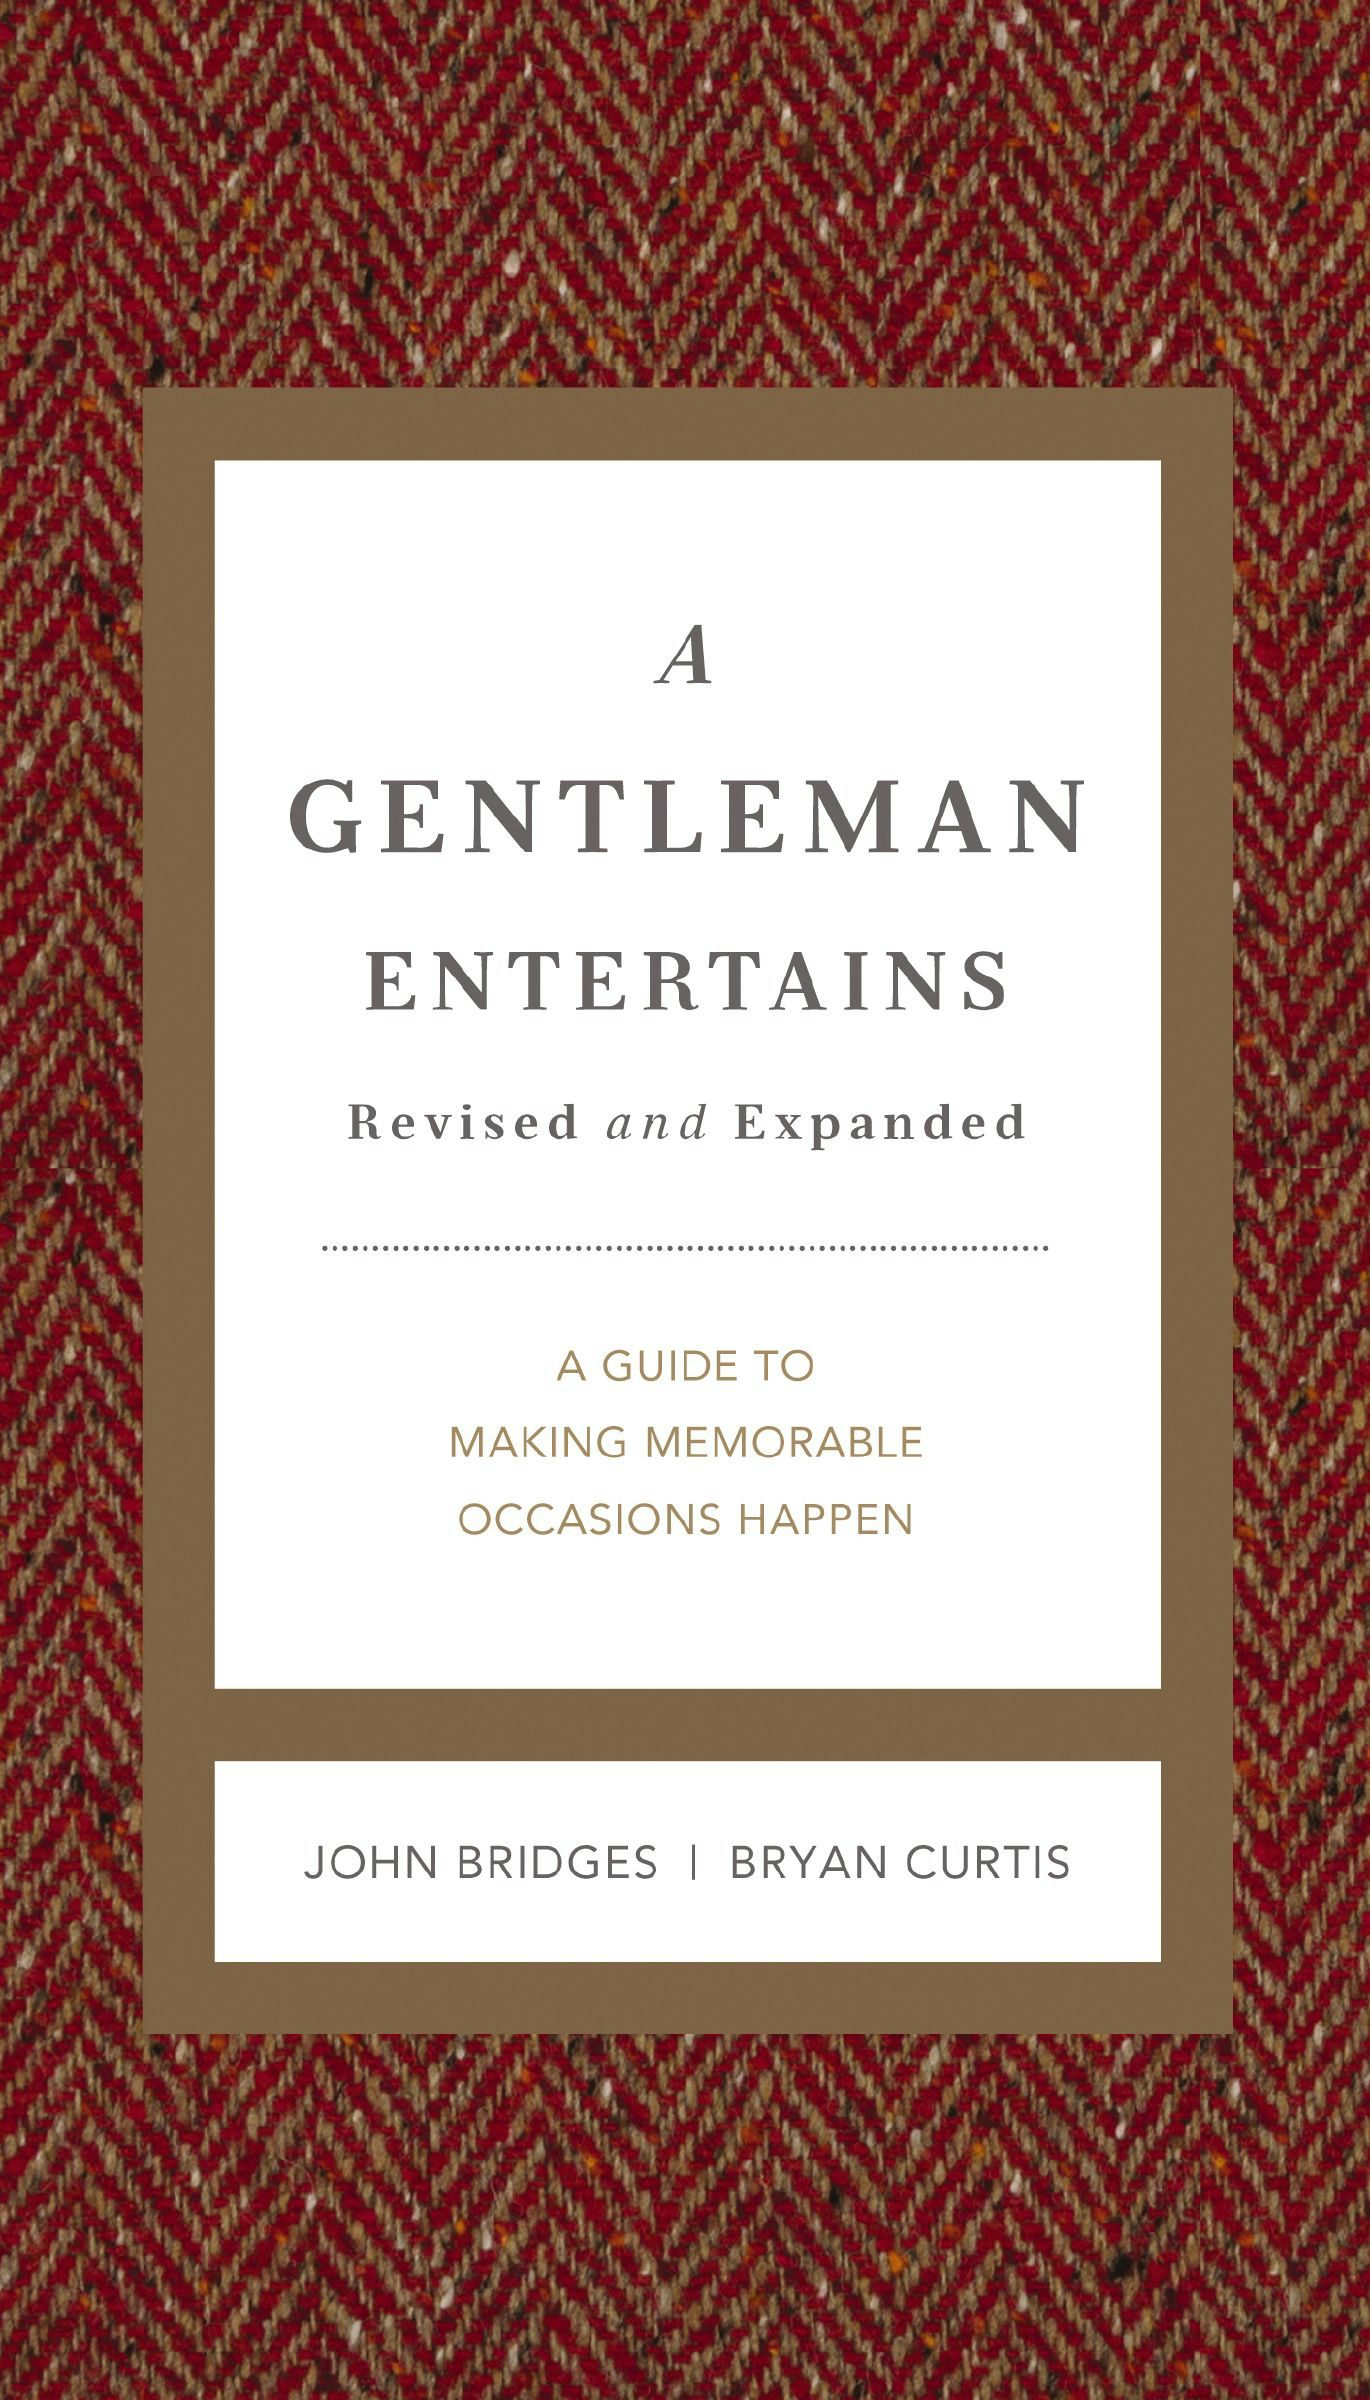 an offer from a gentleman book cover